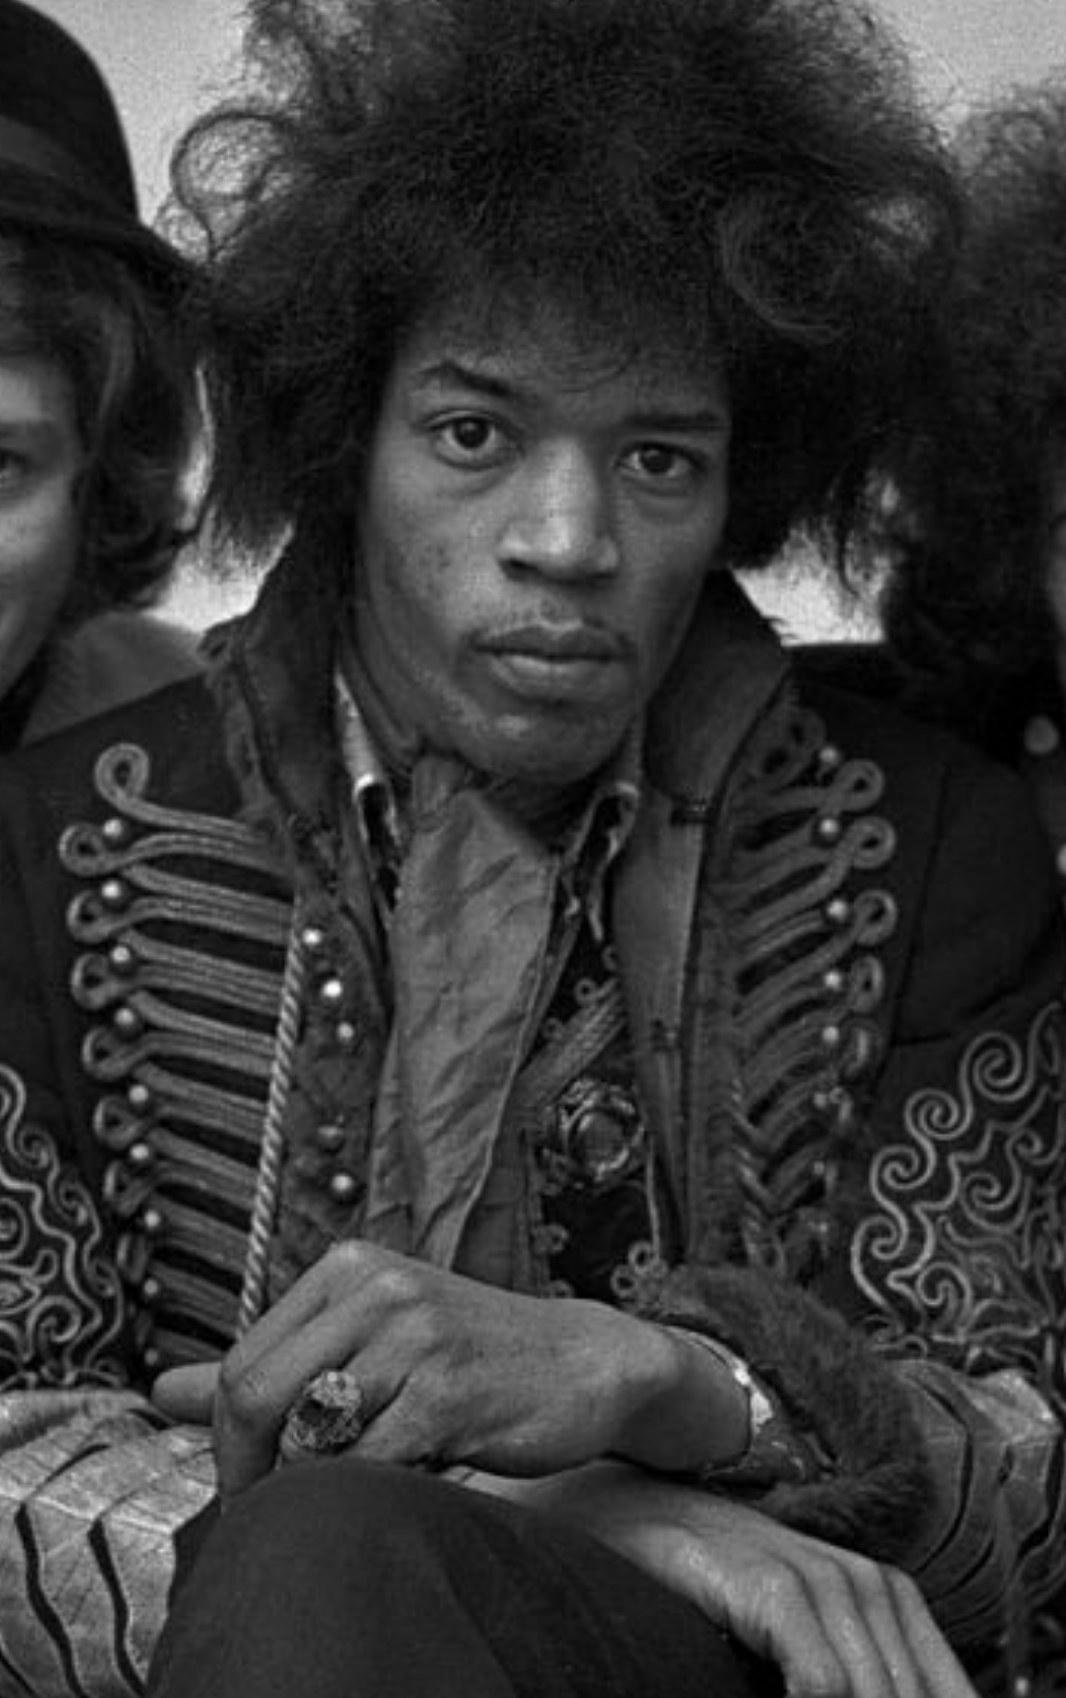 Hendrix posing for a portrait in 1967